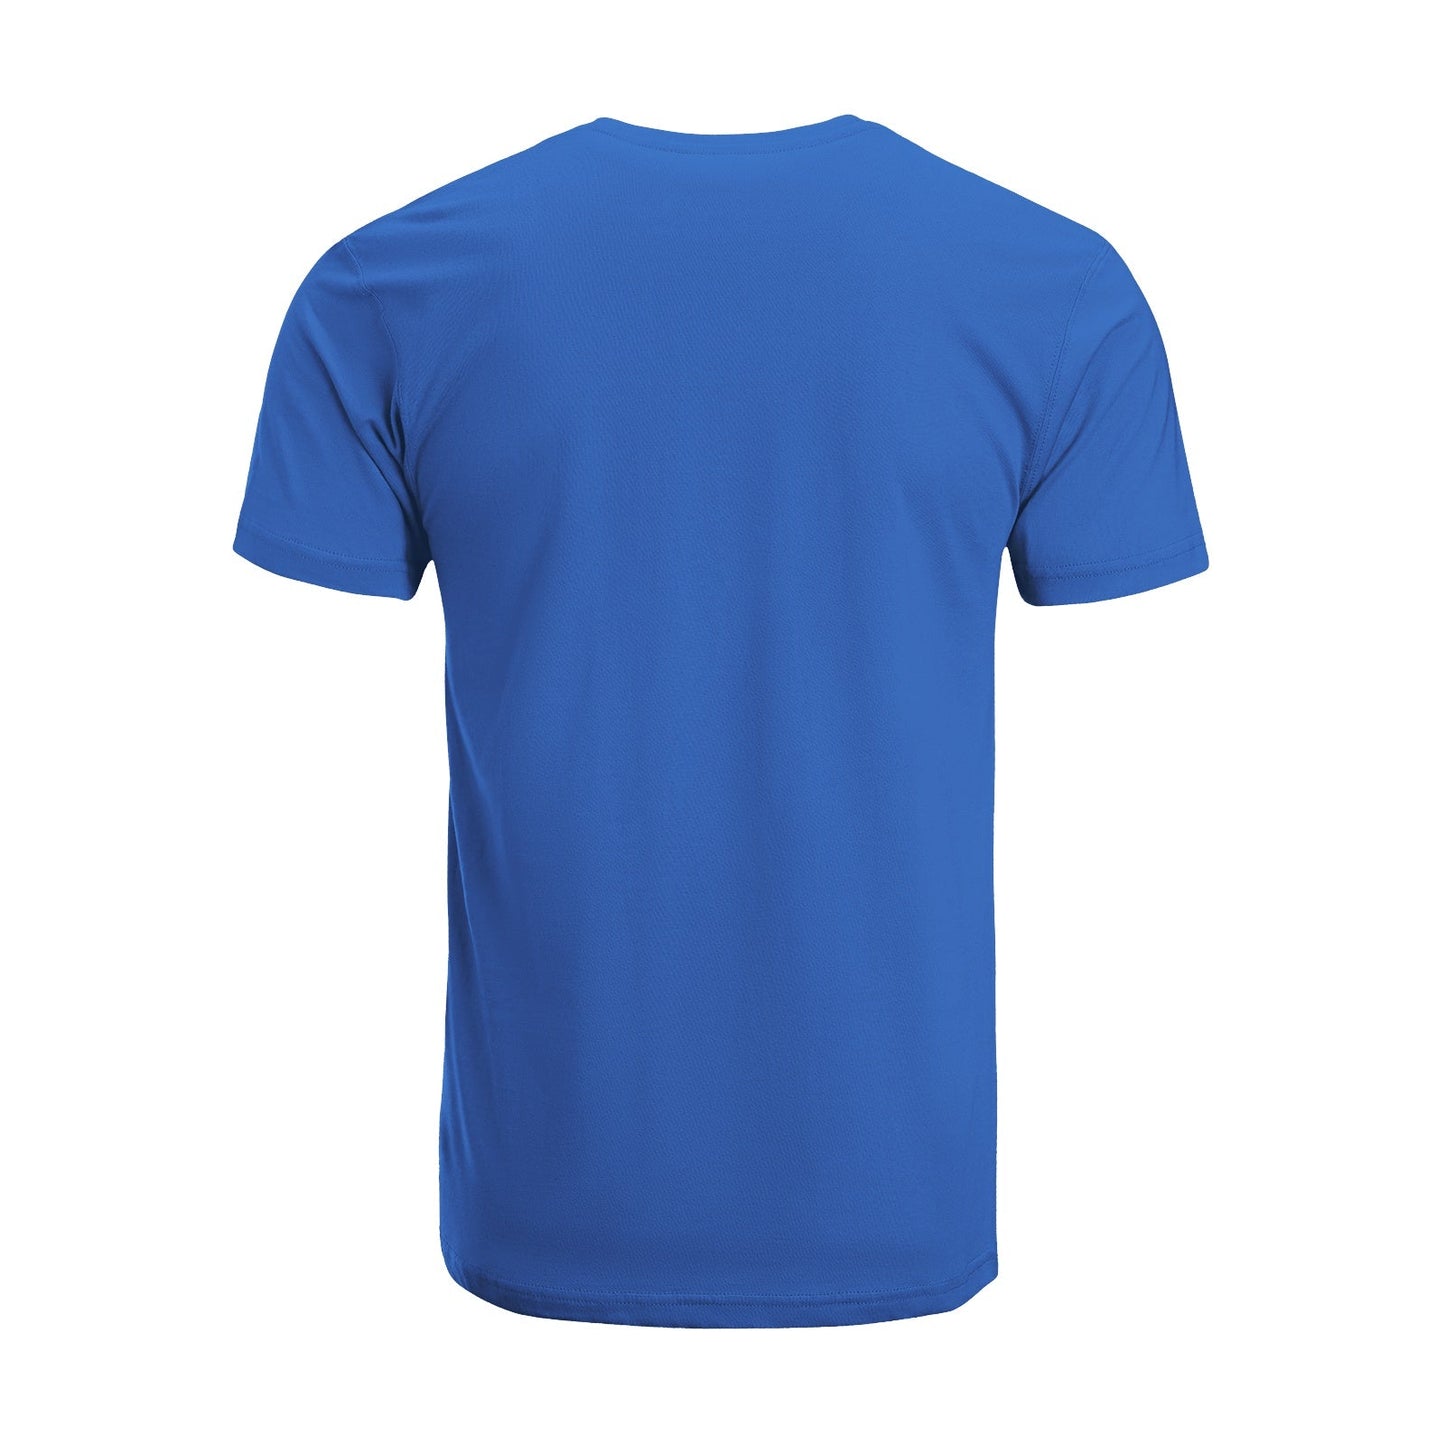 Unisex Short Sleeve Crew Neck Cotton Jersey T-Shirt DOG 50